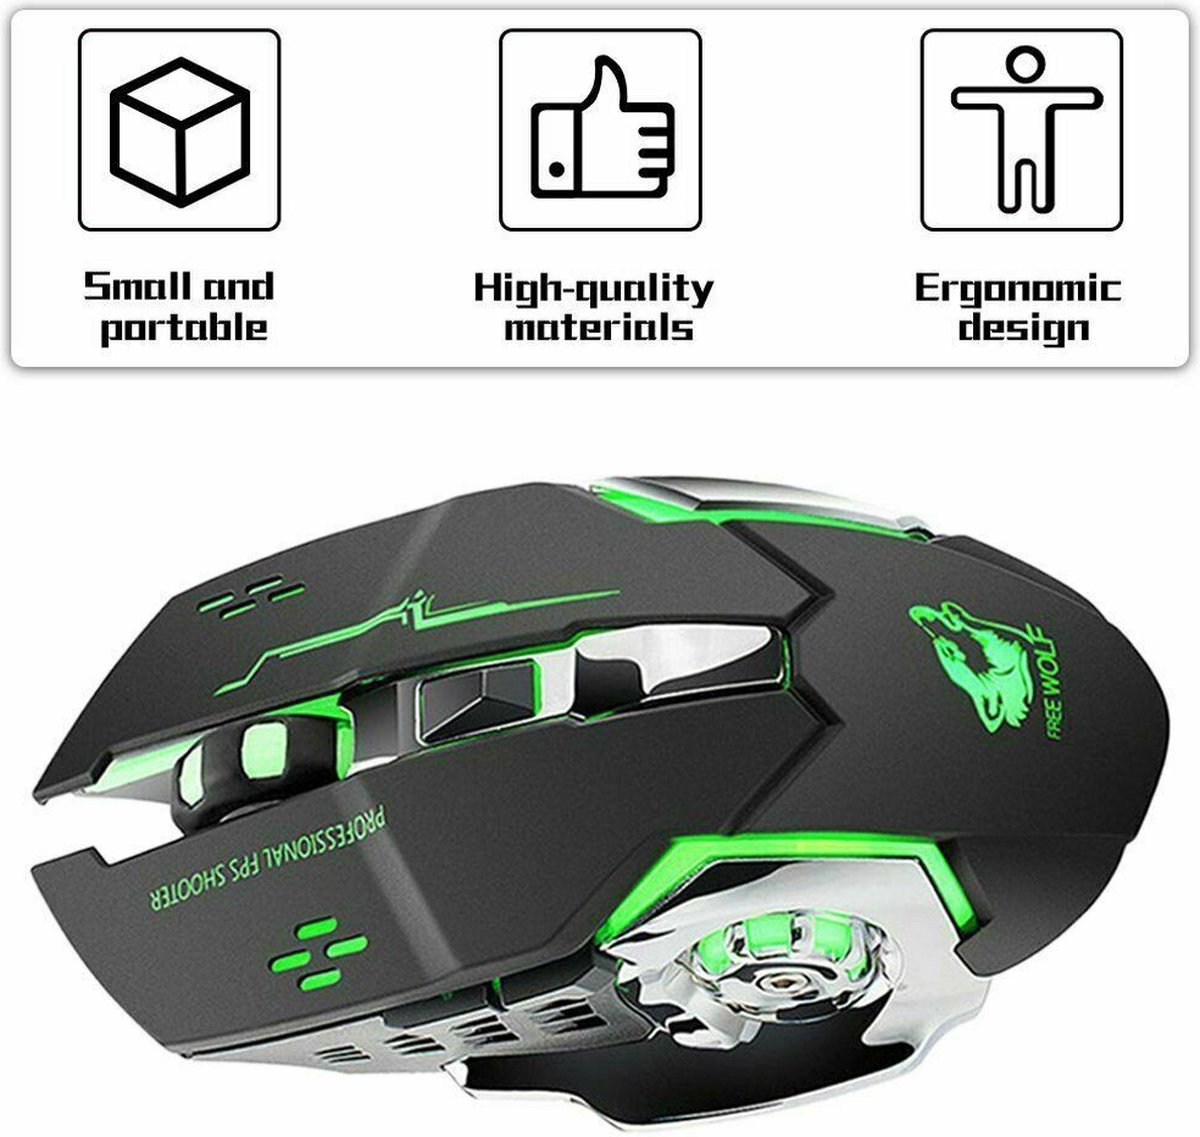 Draadloos gaming muis, ergonomisch ontwerp, stille klik, lichtgevende RGB, 2400 instelbare DPI, 6 toetsen, 150 IPS, 600 mAh oplaadbare batterij, wireless gaming mouse